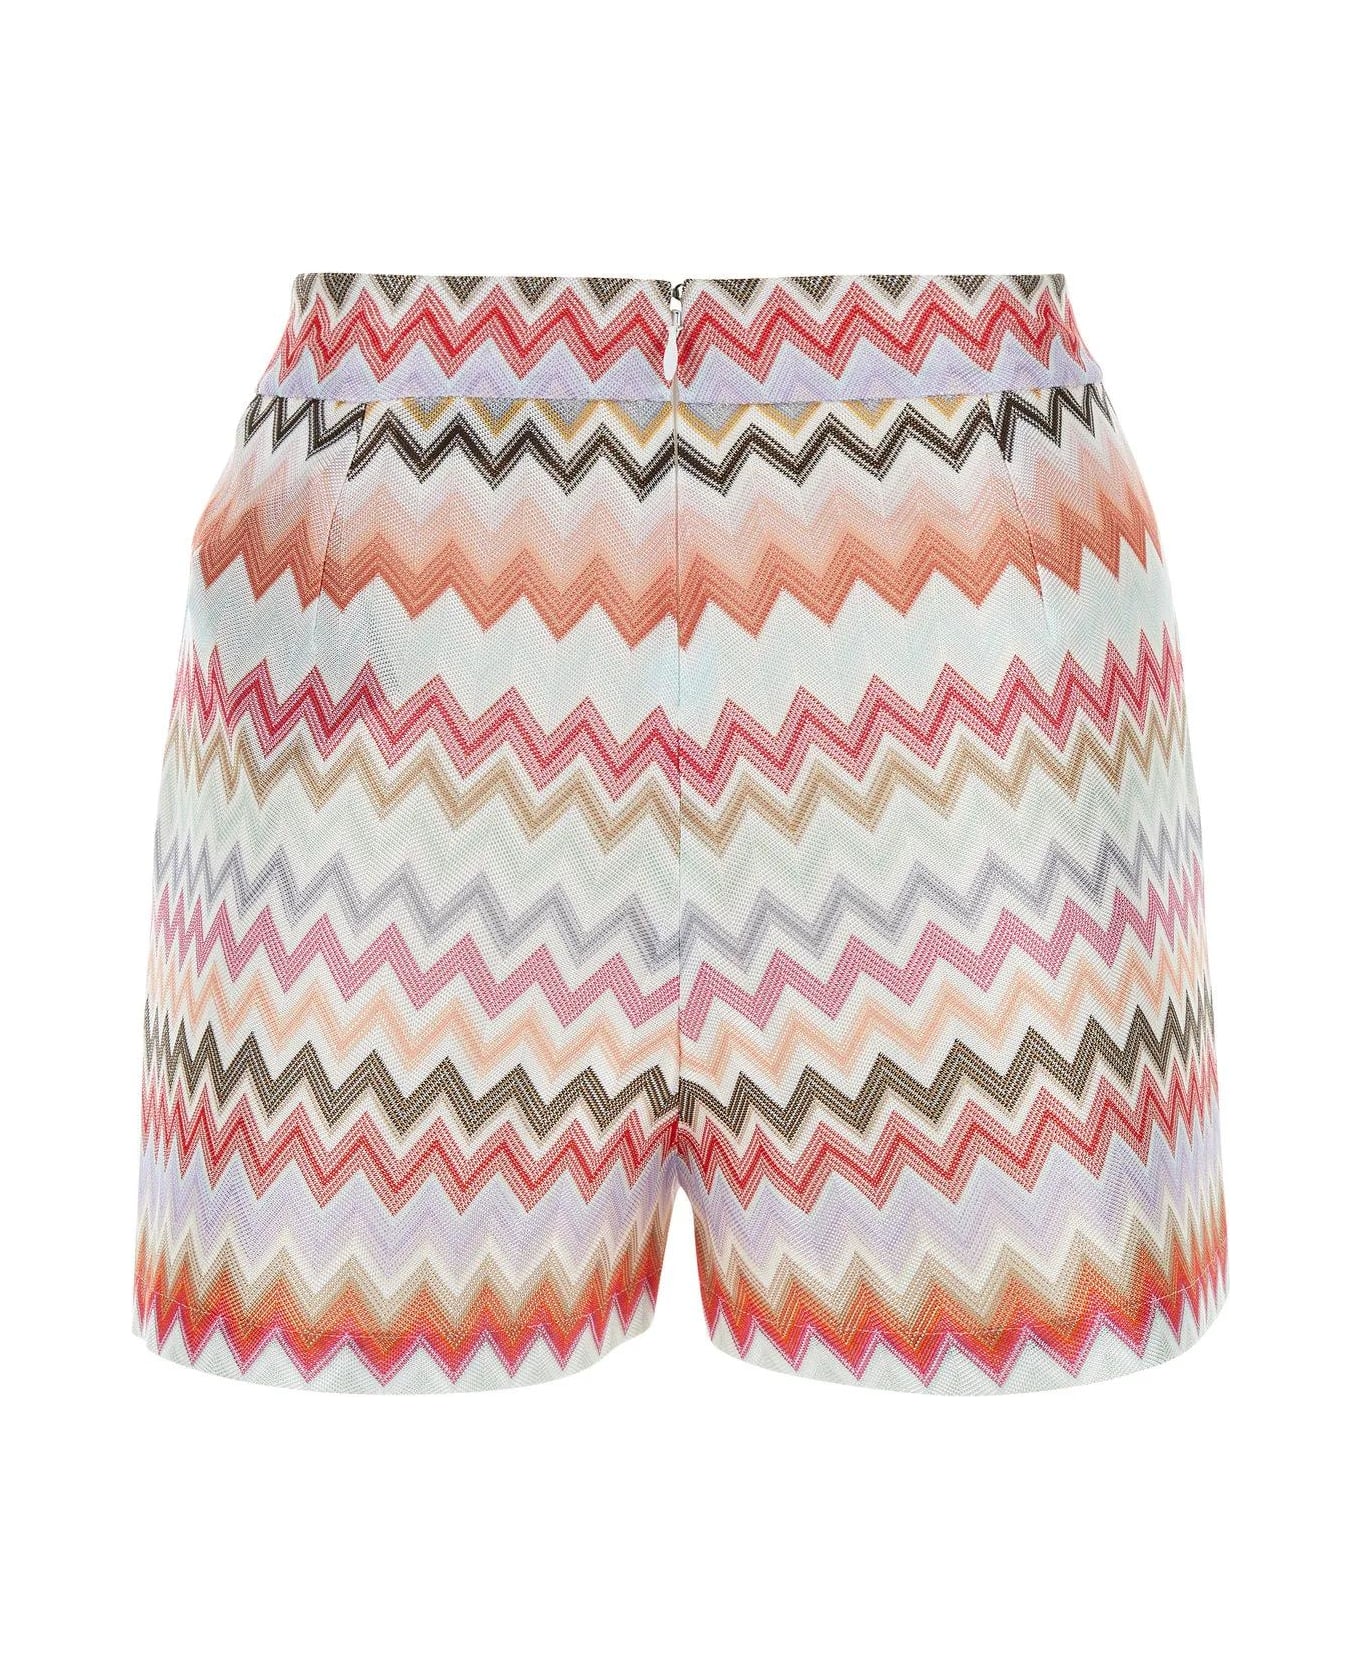 Missoni Embroidered Cotton Blend Shorts - Multicolore